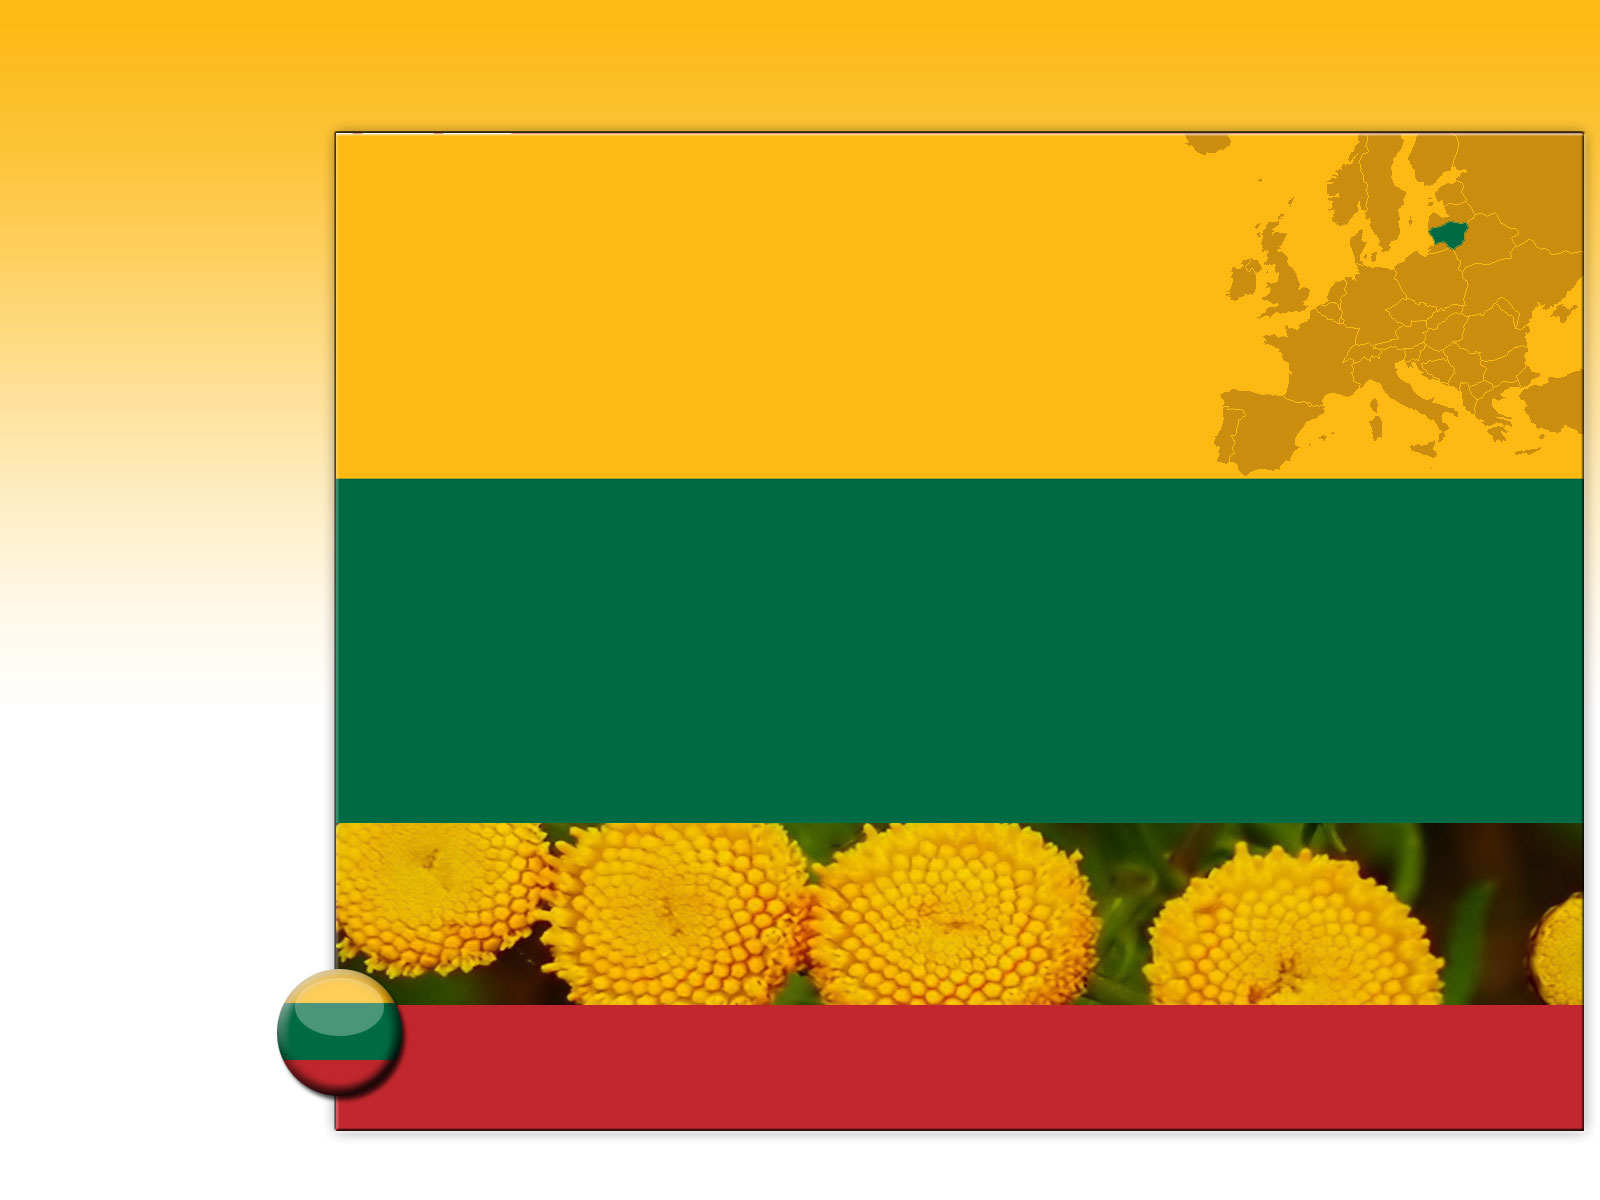 Drapeau : Lituanie